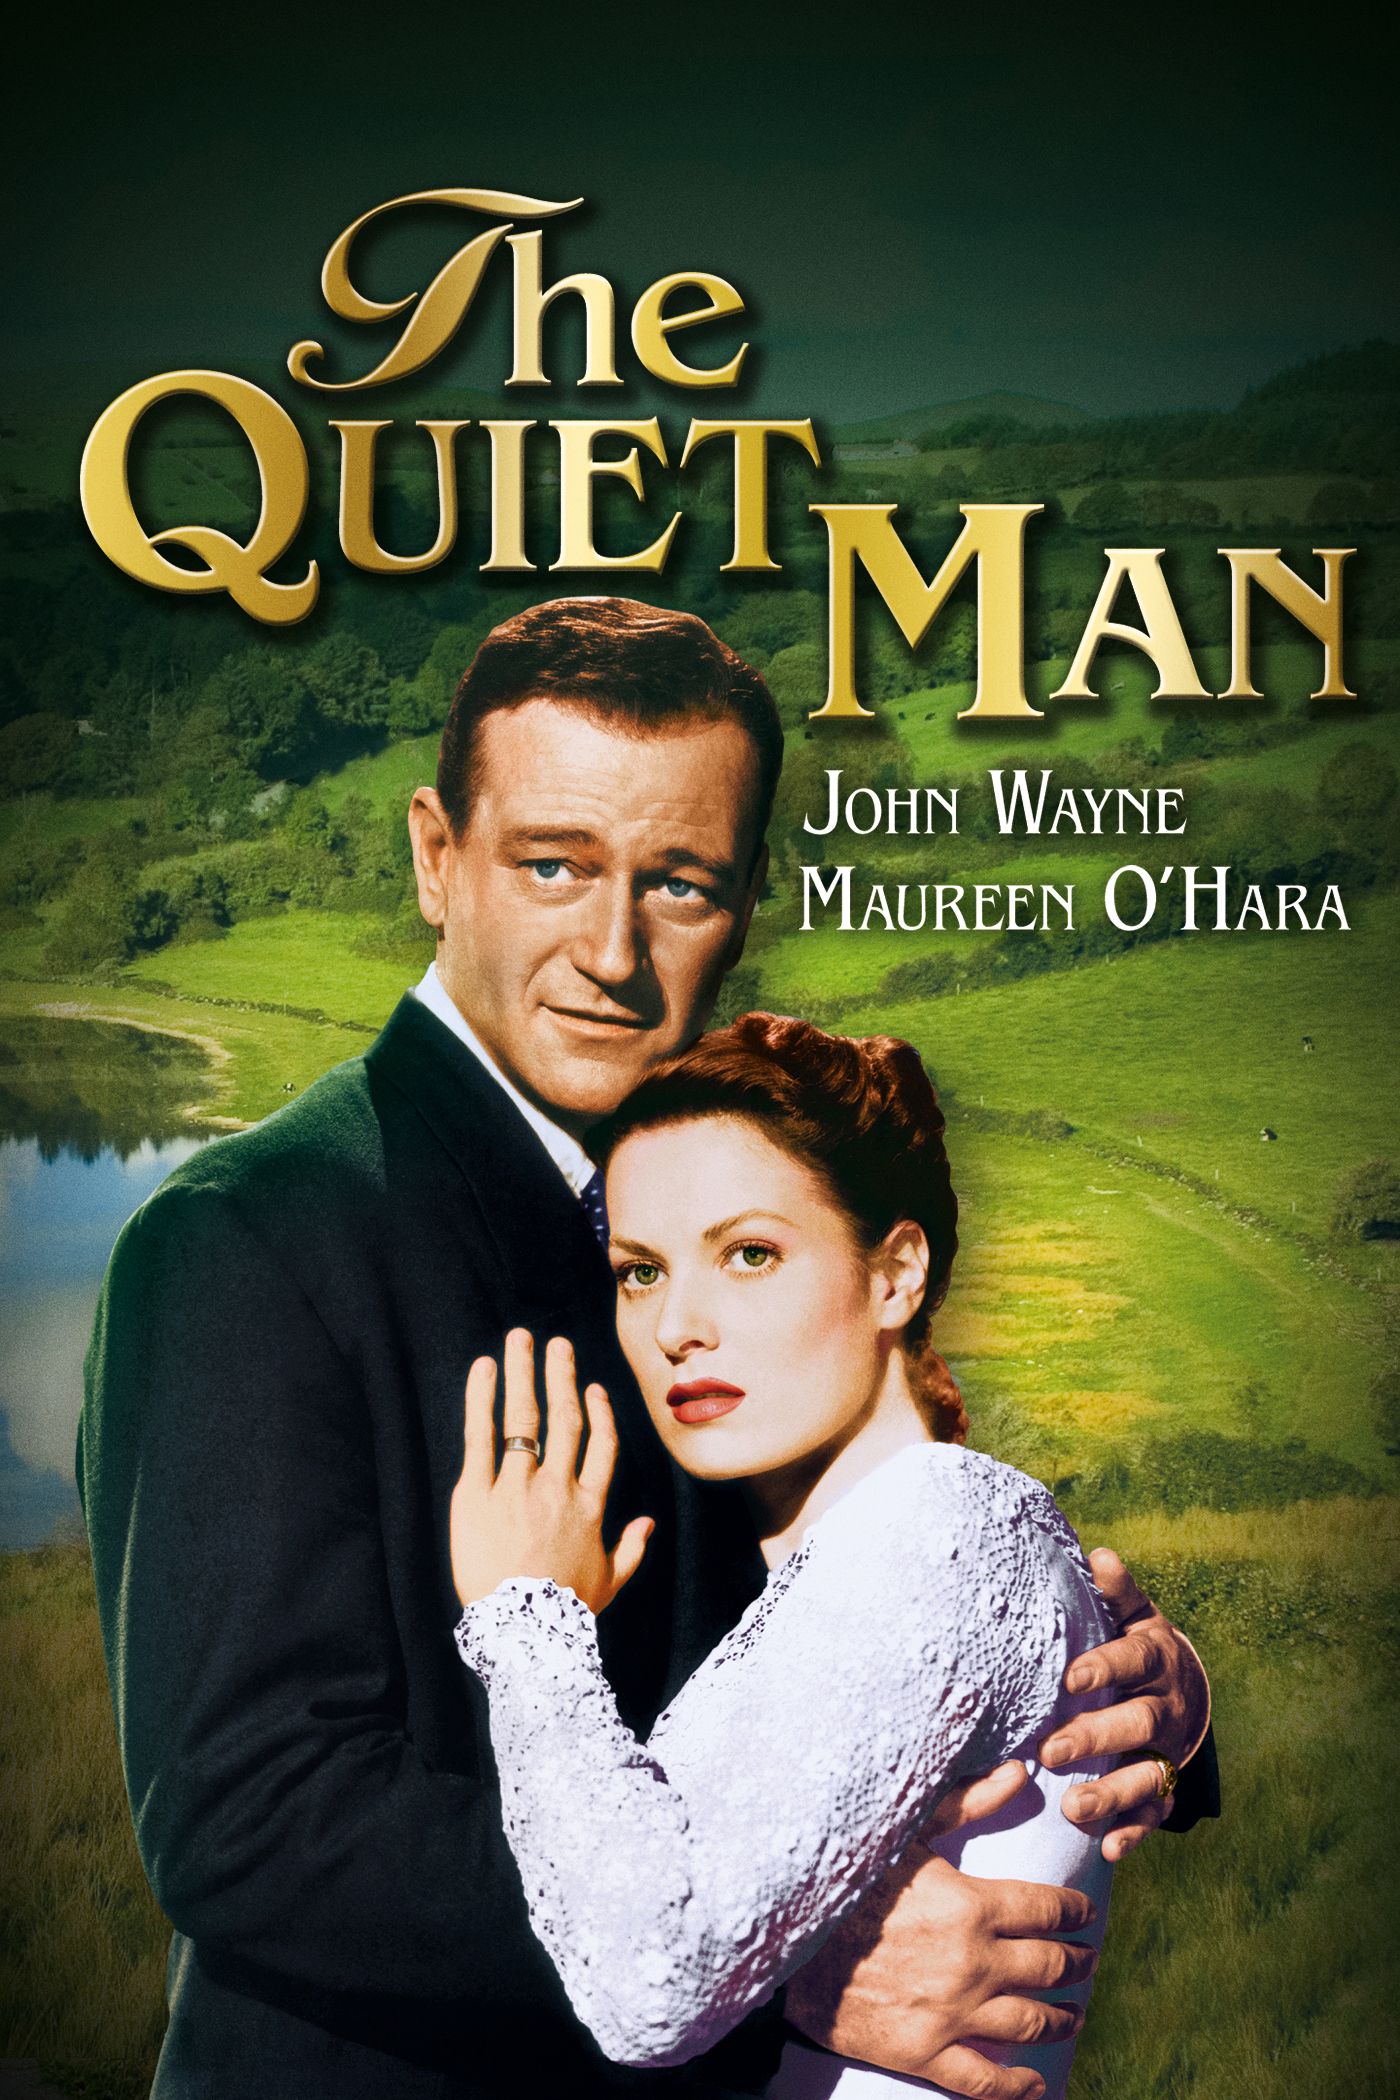 The Quiet Man Film Poster.jpg